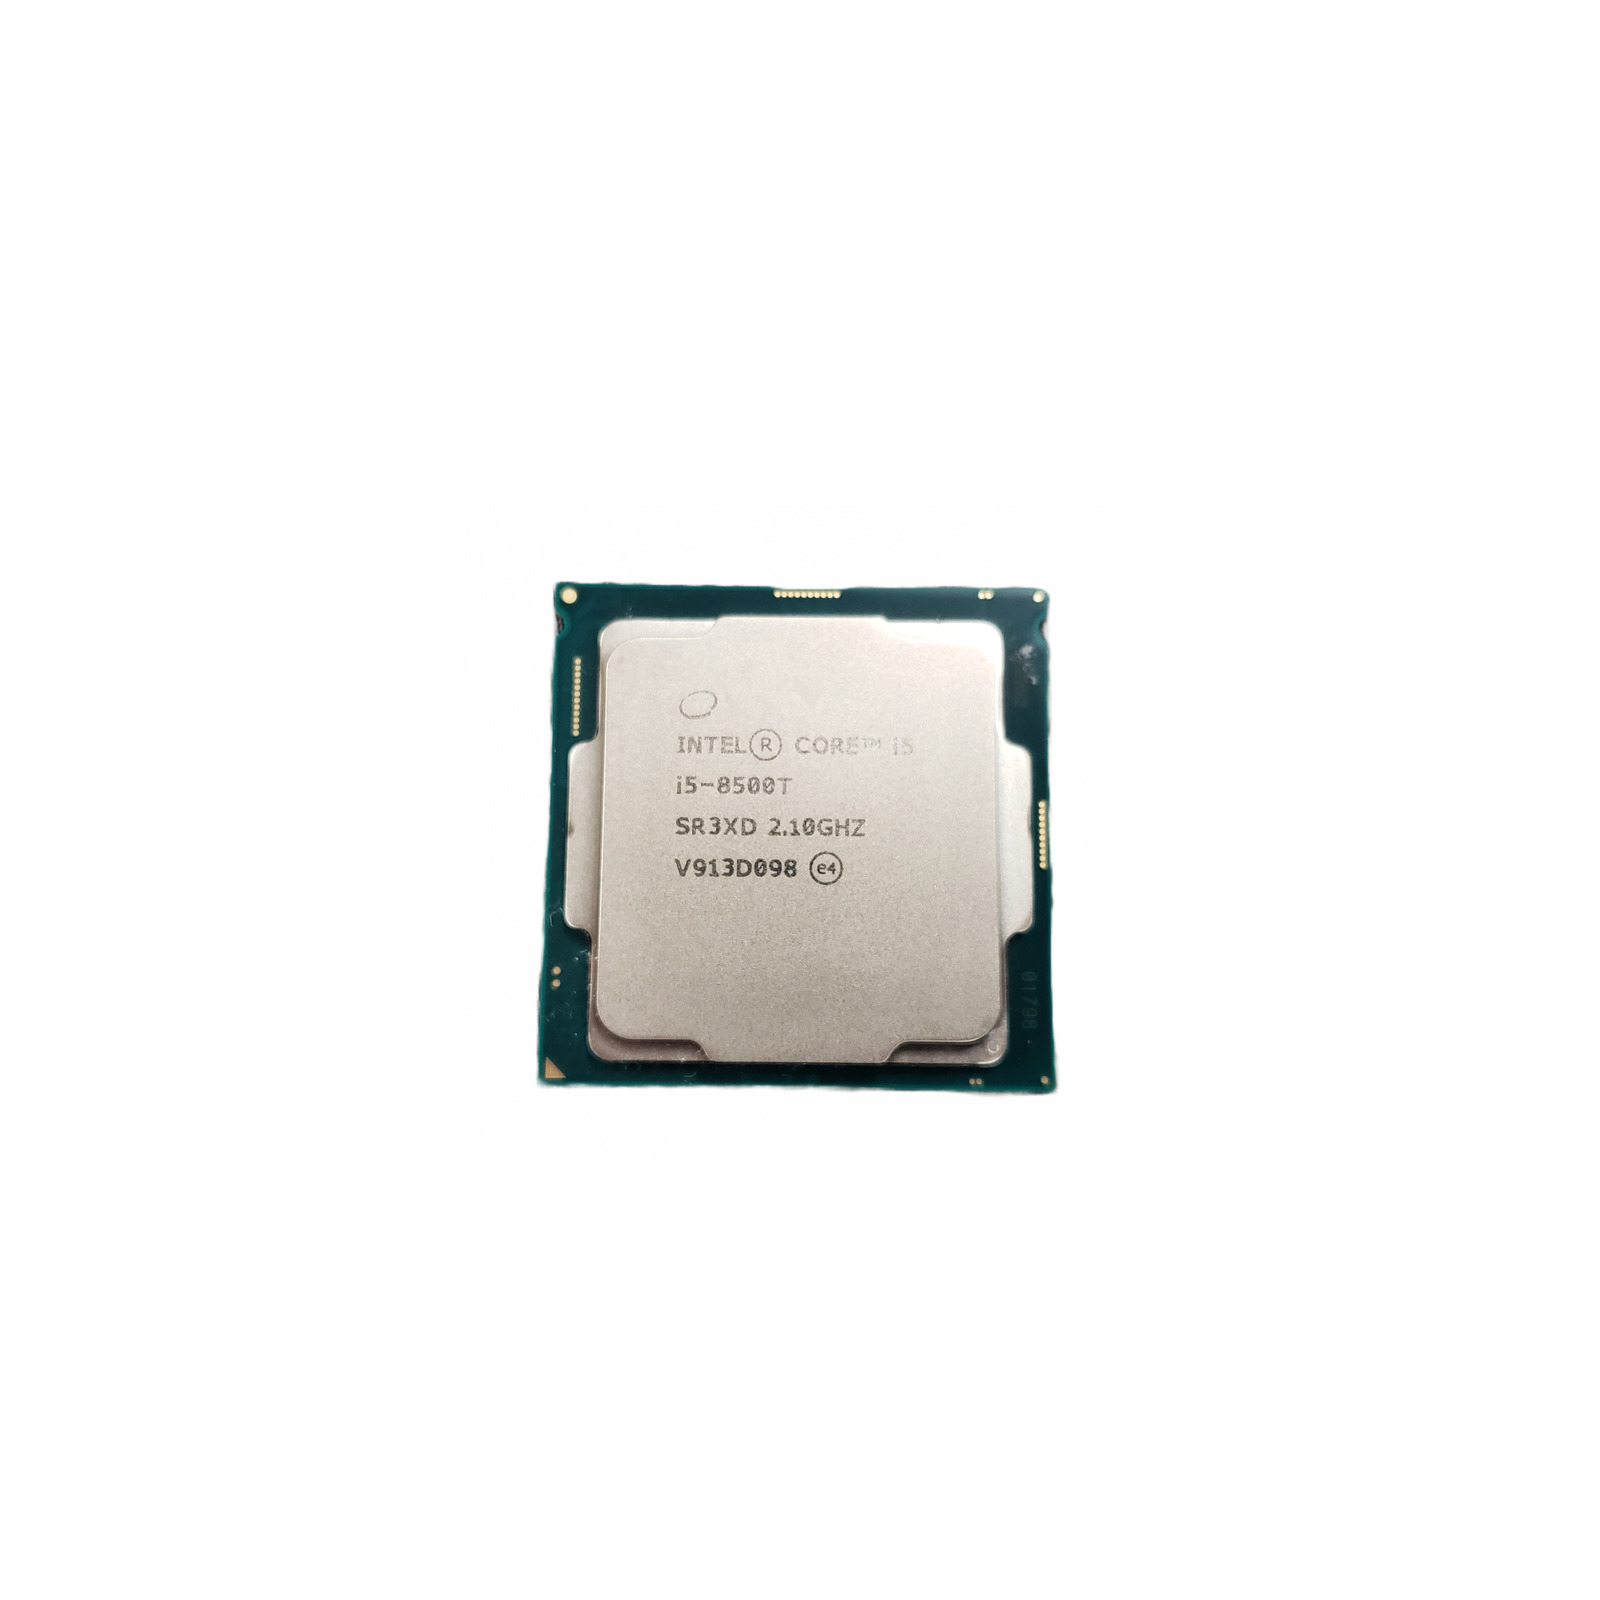 [ BULK Of 71 ] Intel i5-8500T 2.10 GHZ SR3XD 6 Core  Processor